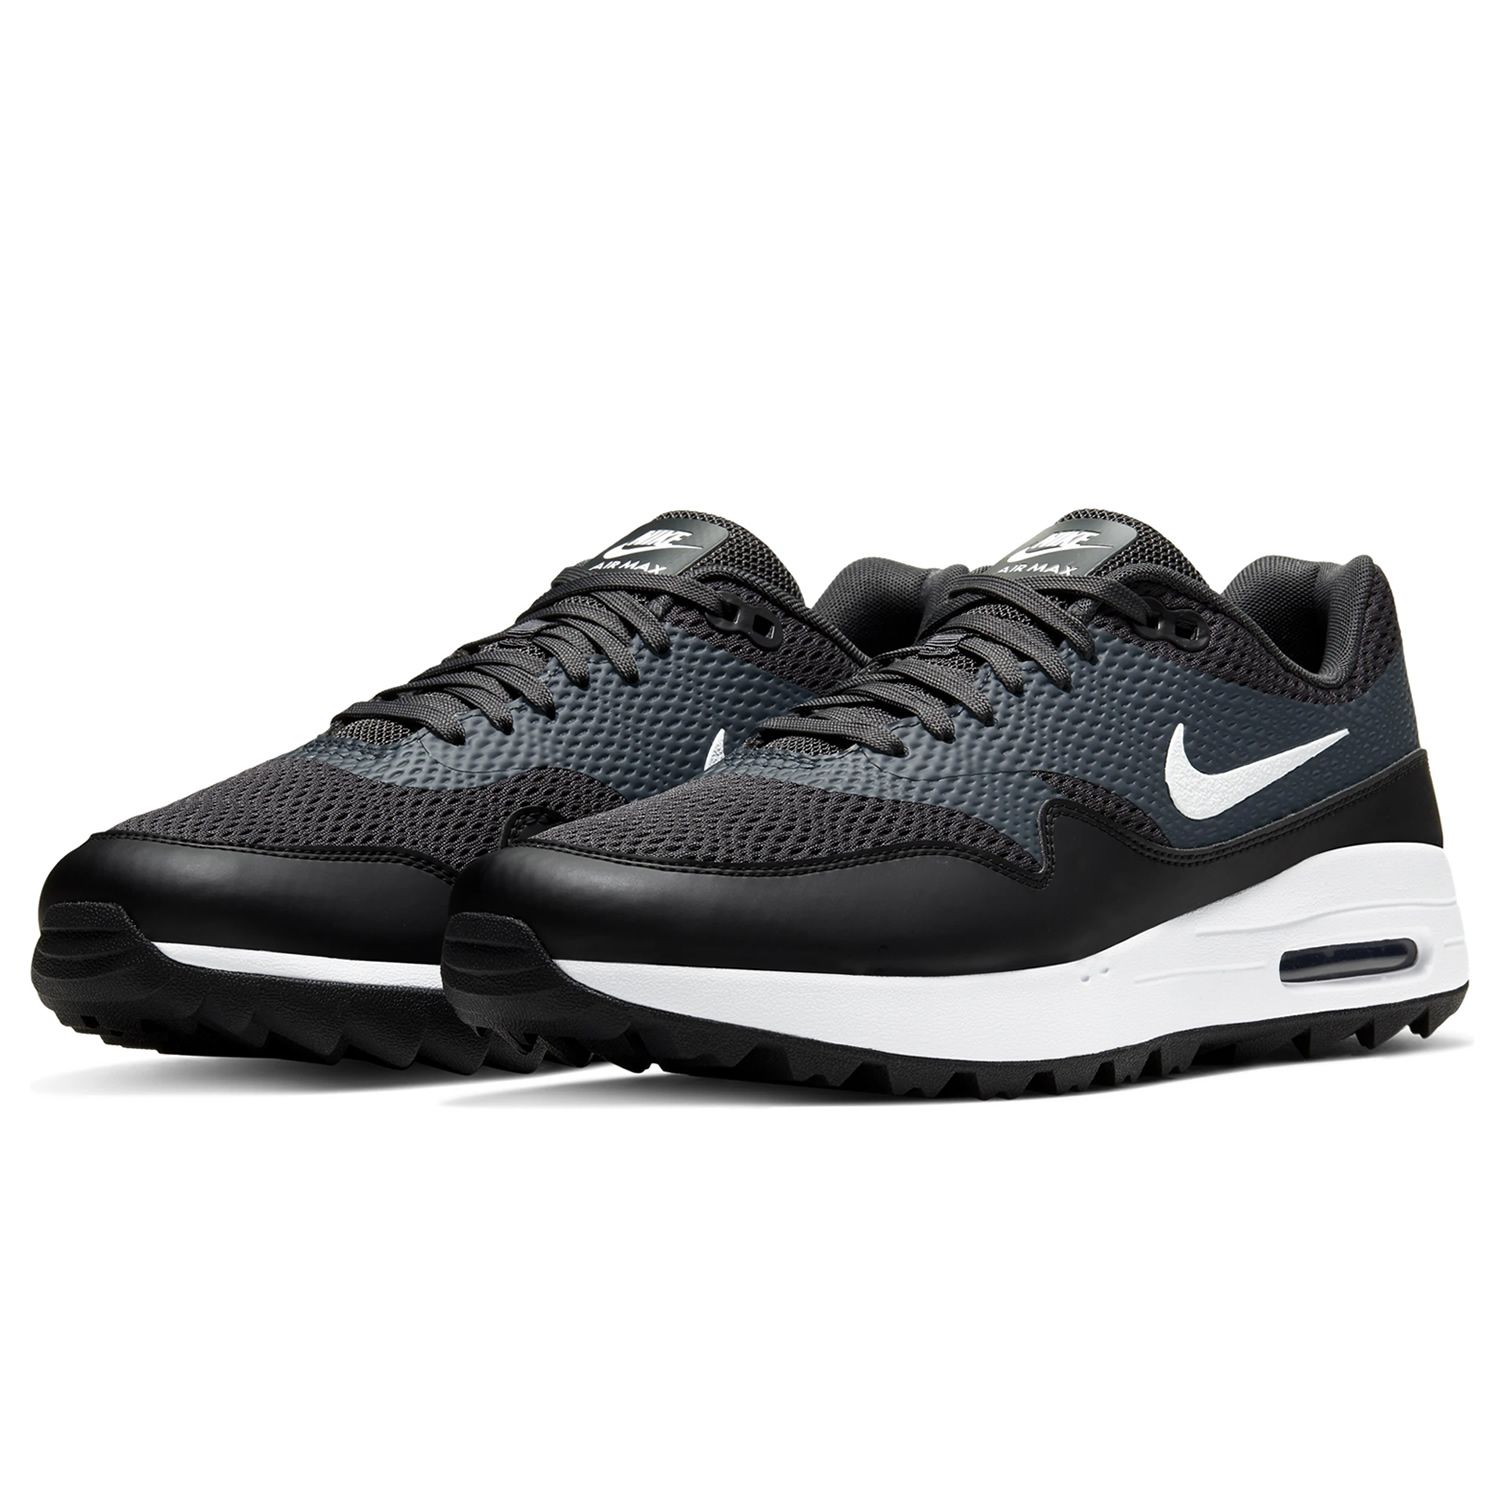 Nike Air Max 90 G Golf Shoes Black/White/Anthracite | Scottsdale Golf